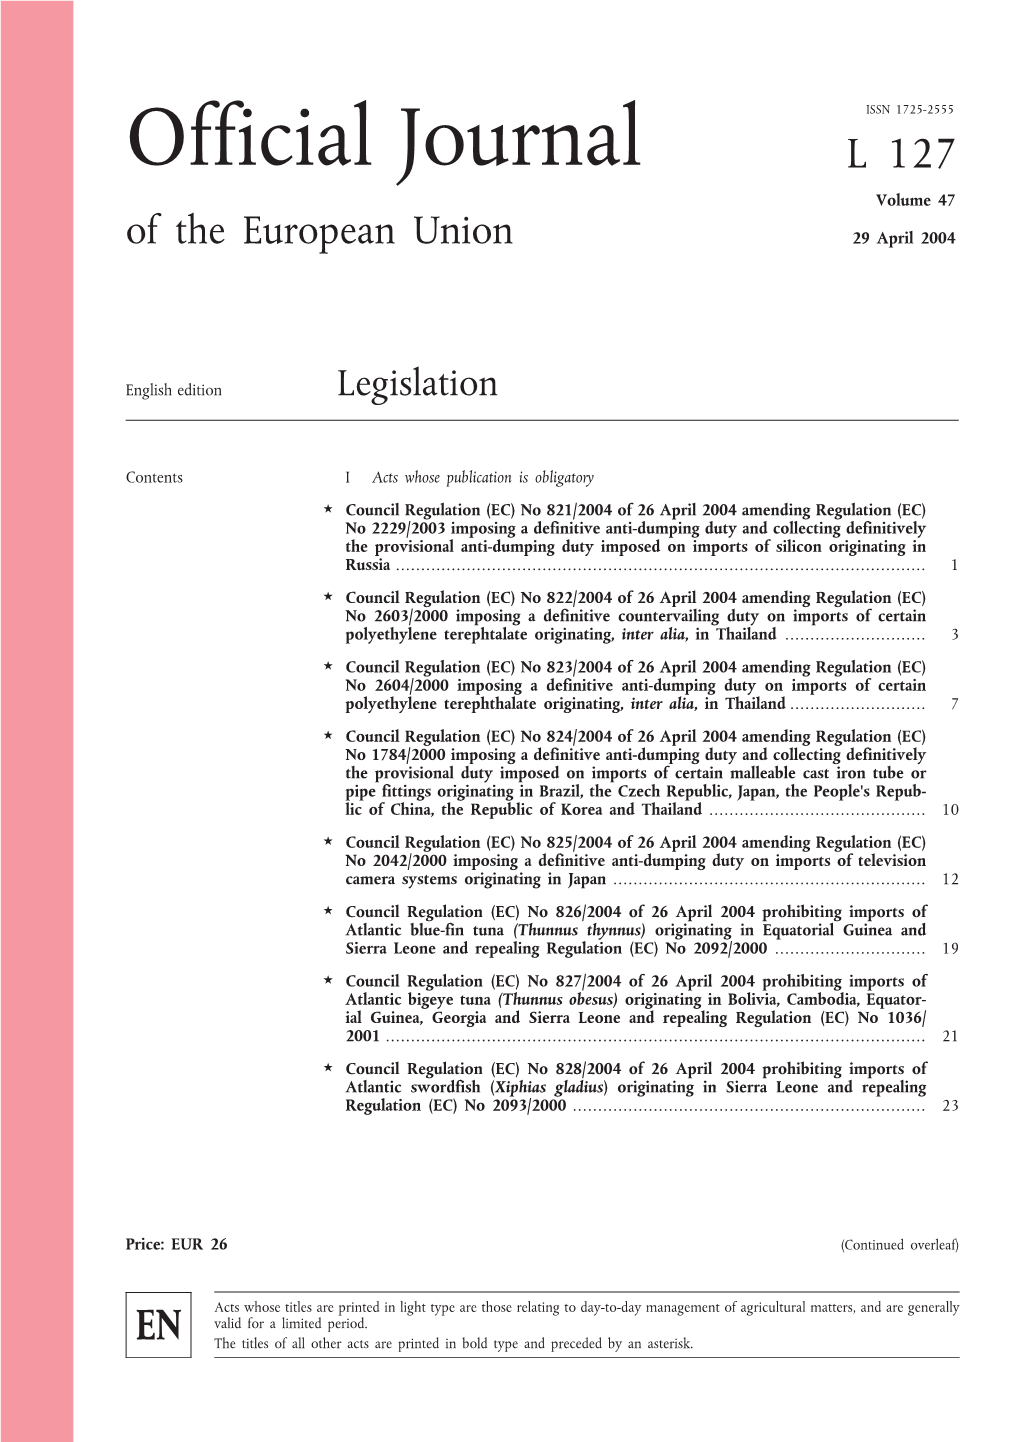 Official Journal L127 Volume 47 of the European Union 29 April 2004